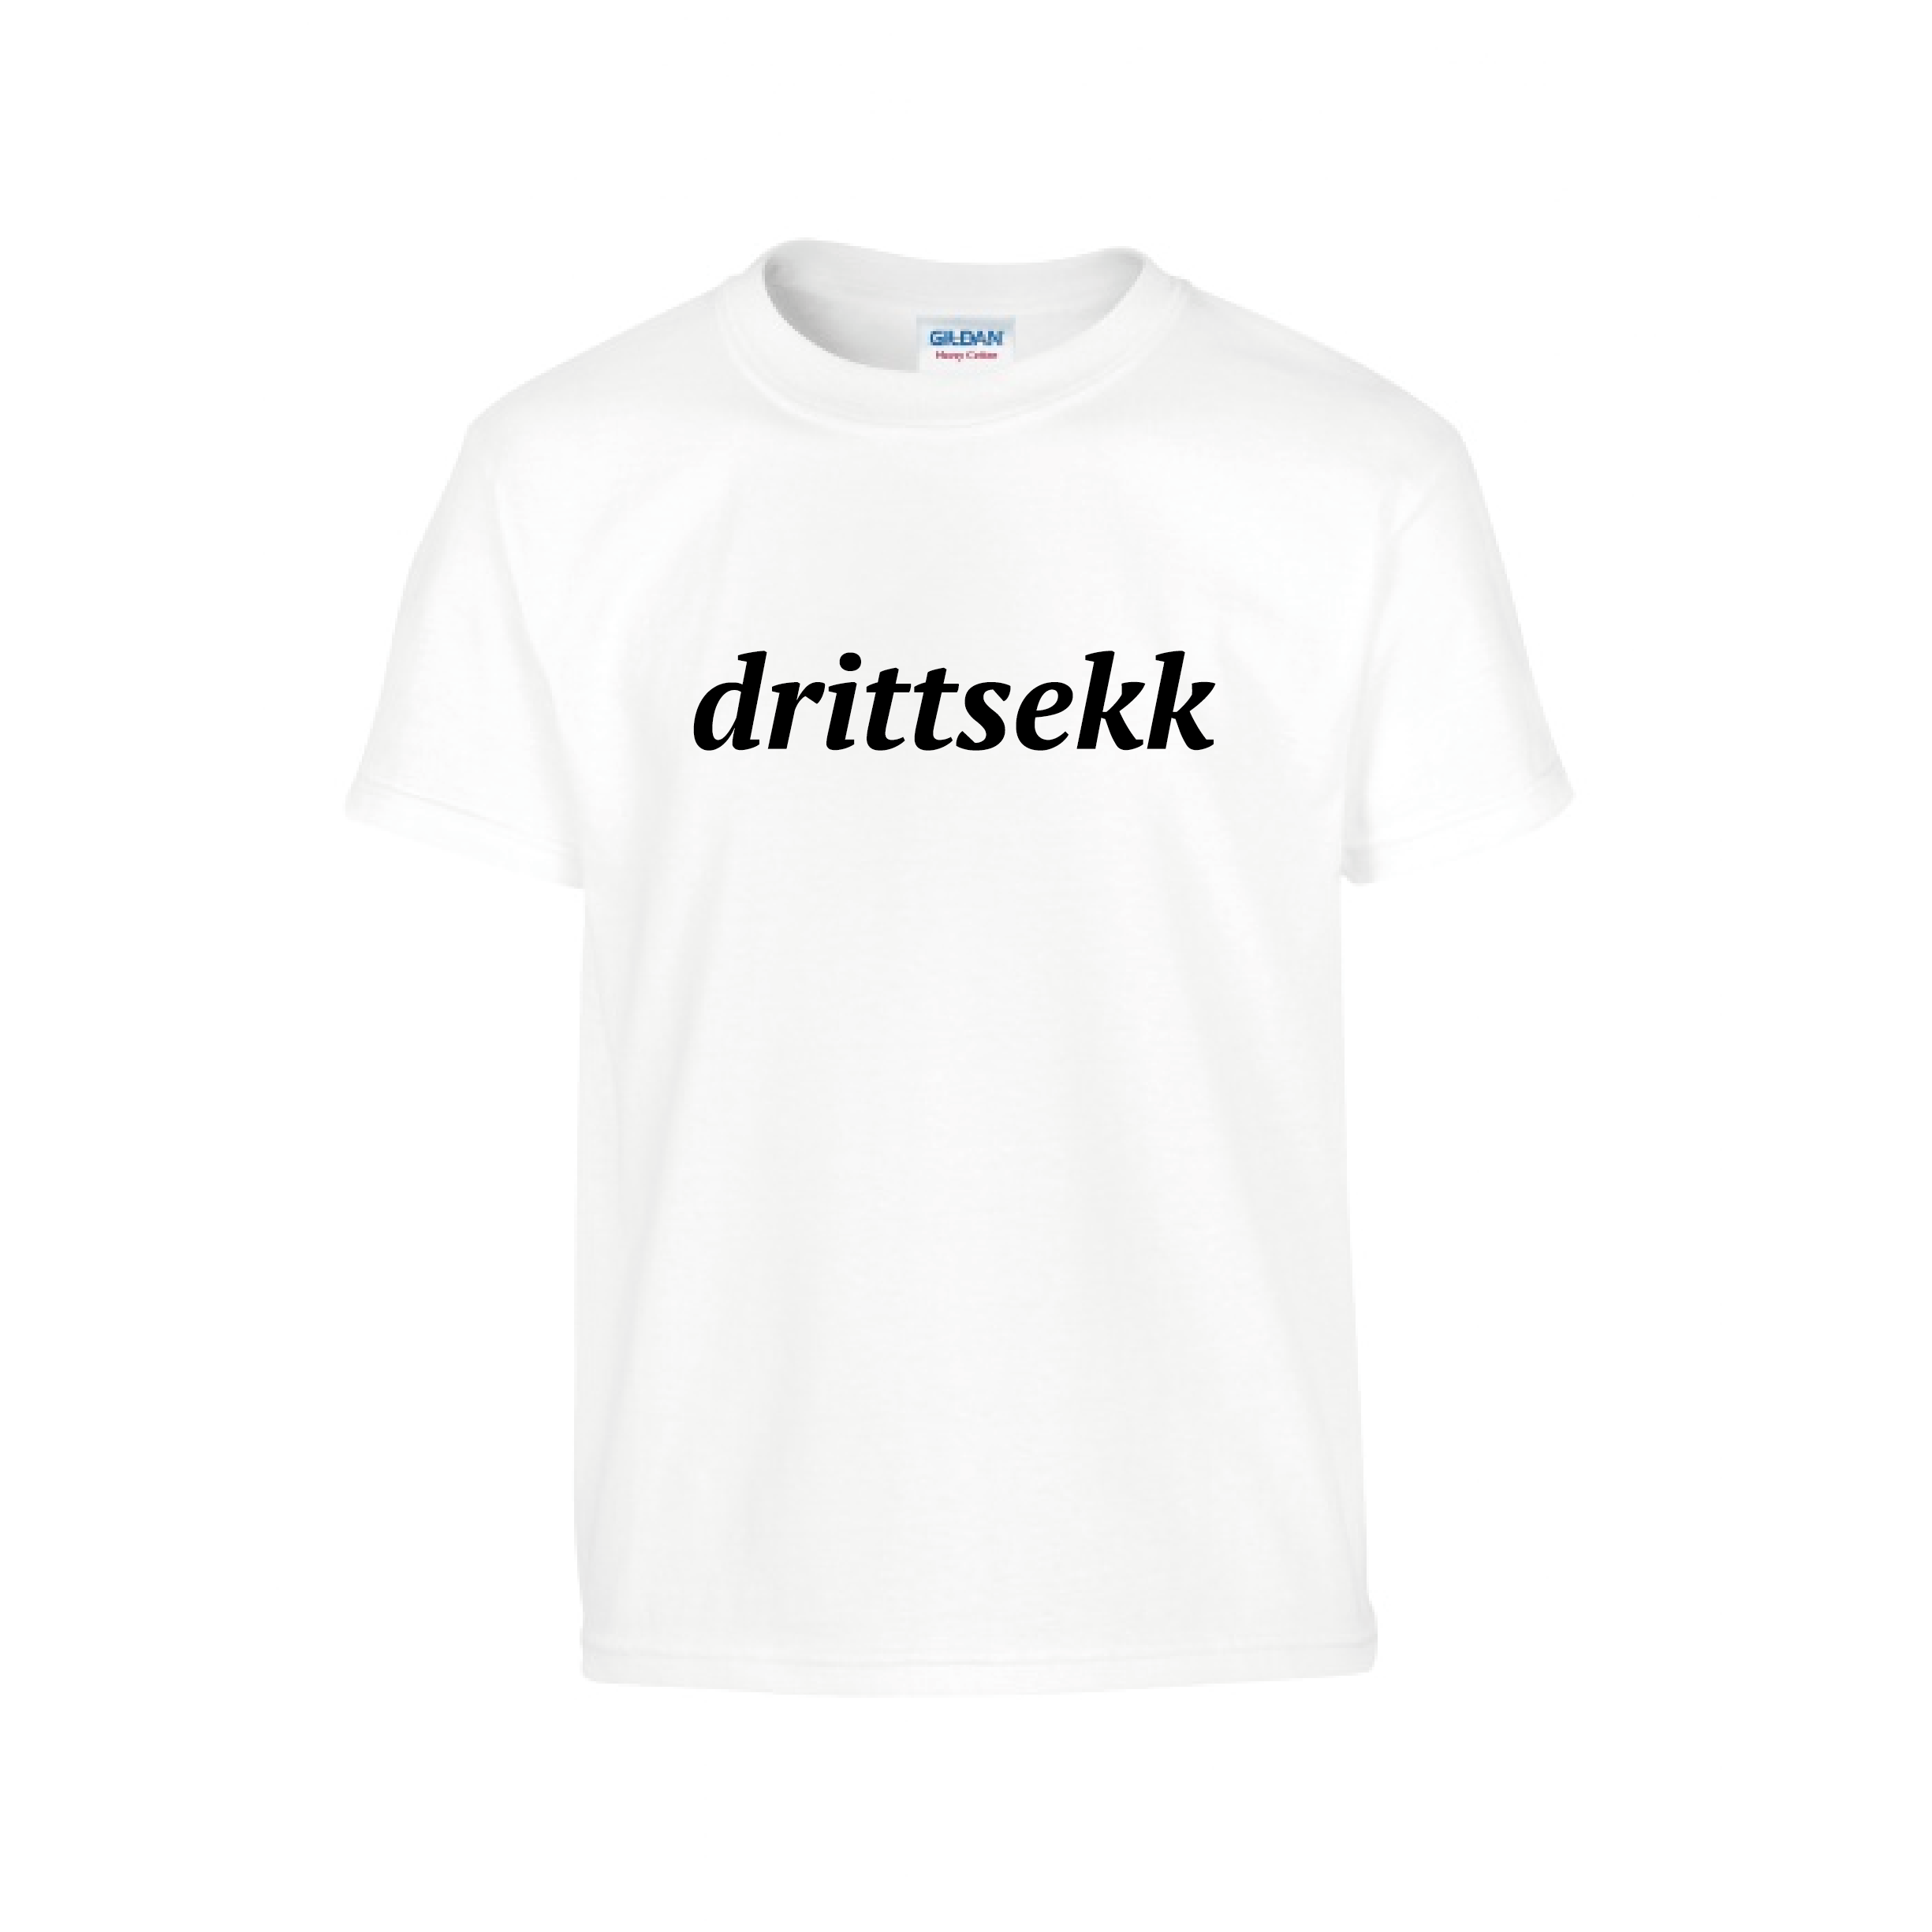 Drittsekk t-shirt